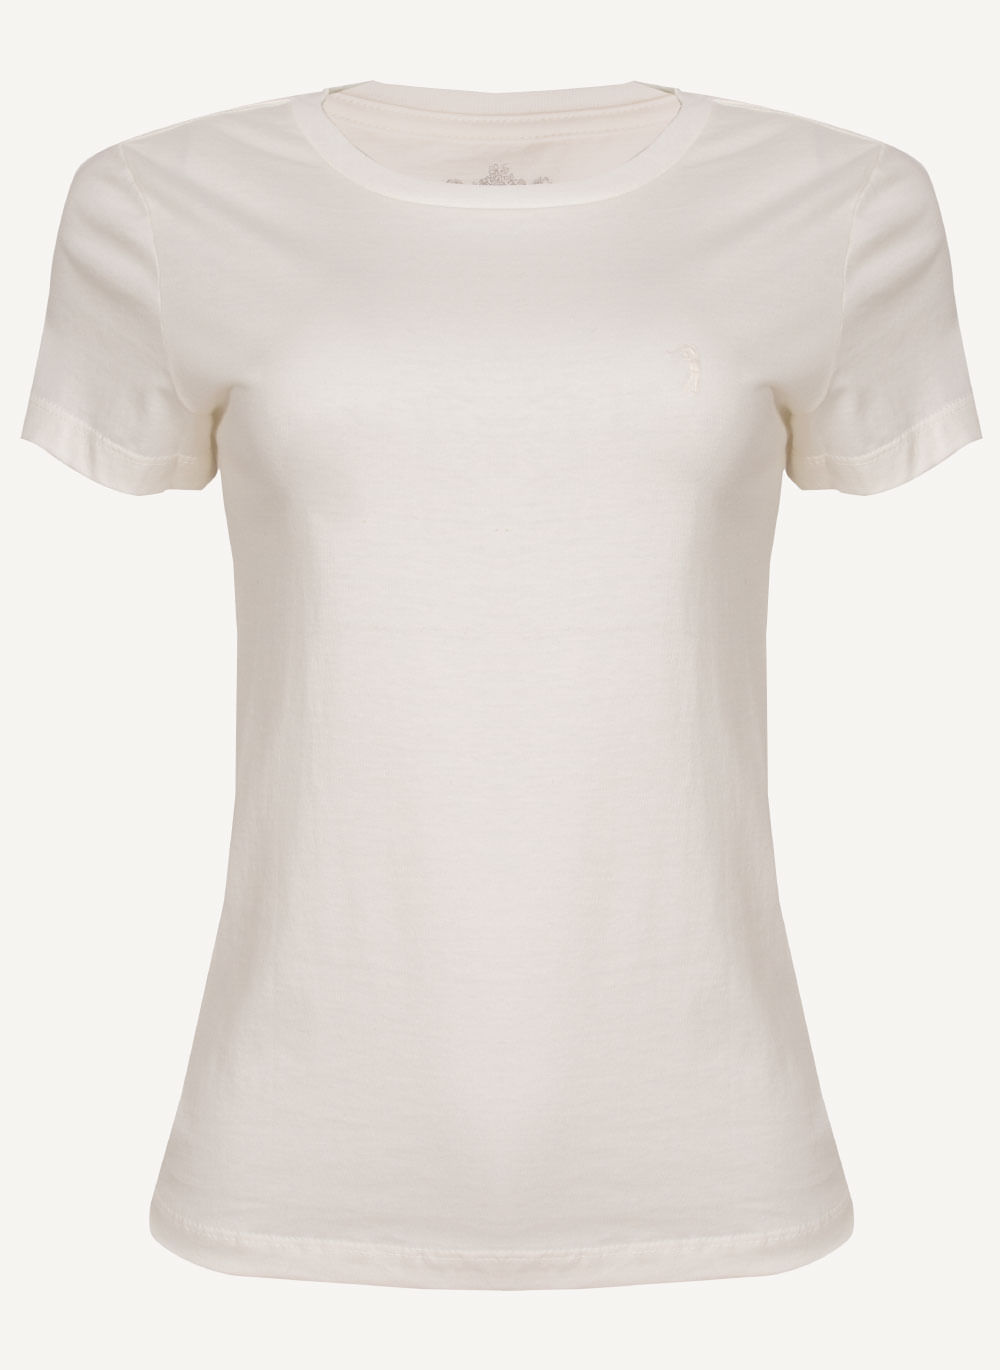 Camiseta-Feminina-Aleatory-Basica-Gola-Careca-Bege-Bege-GG